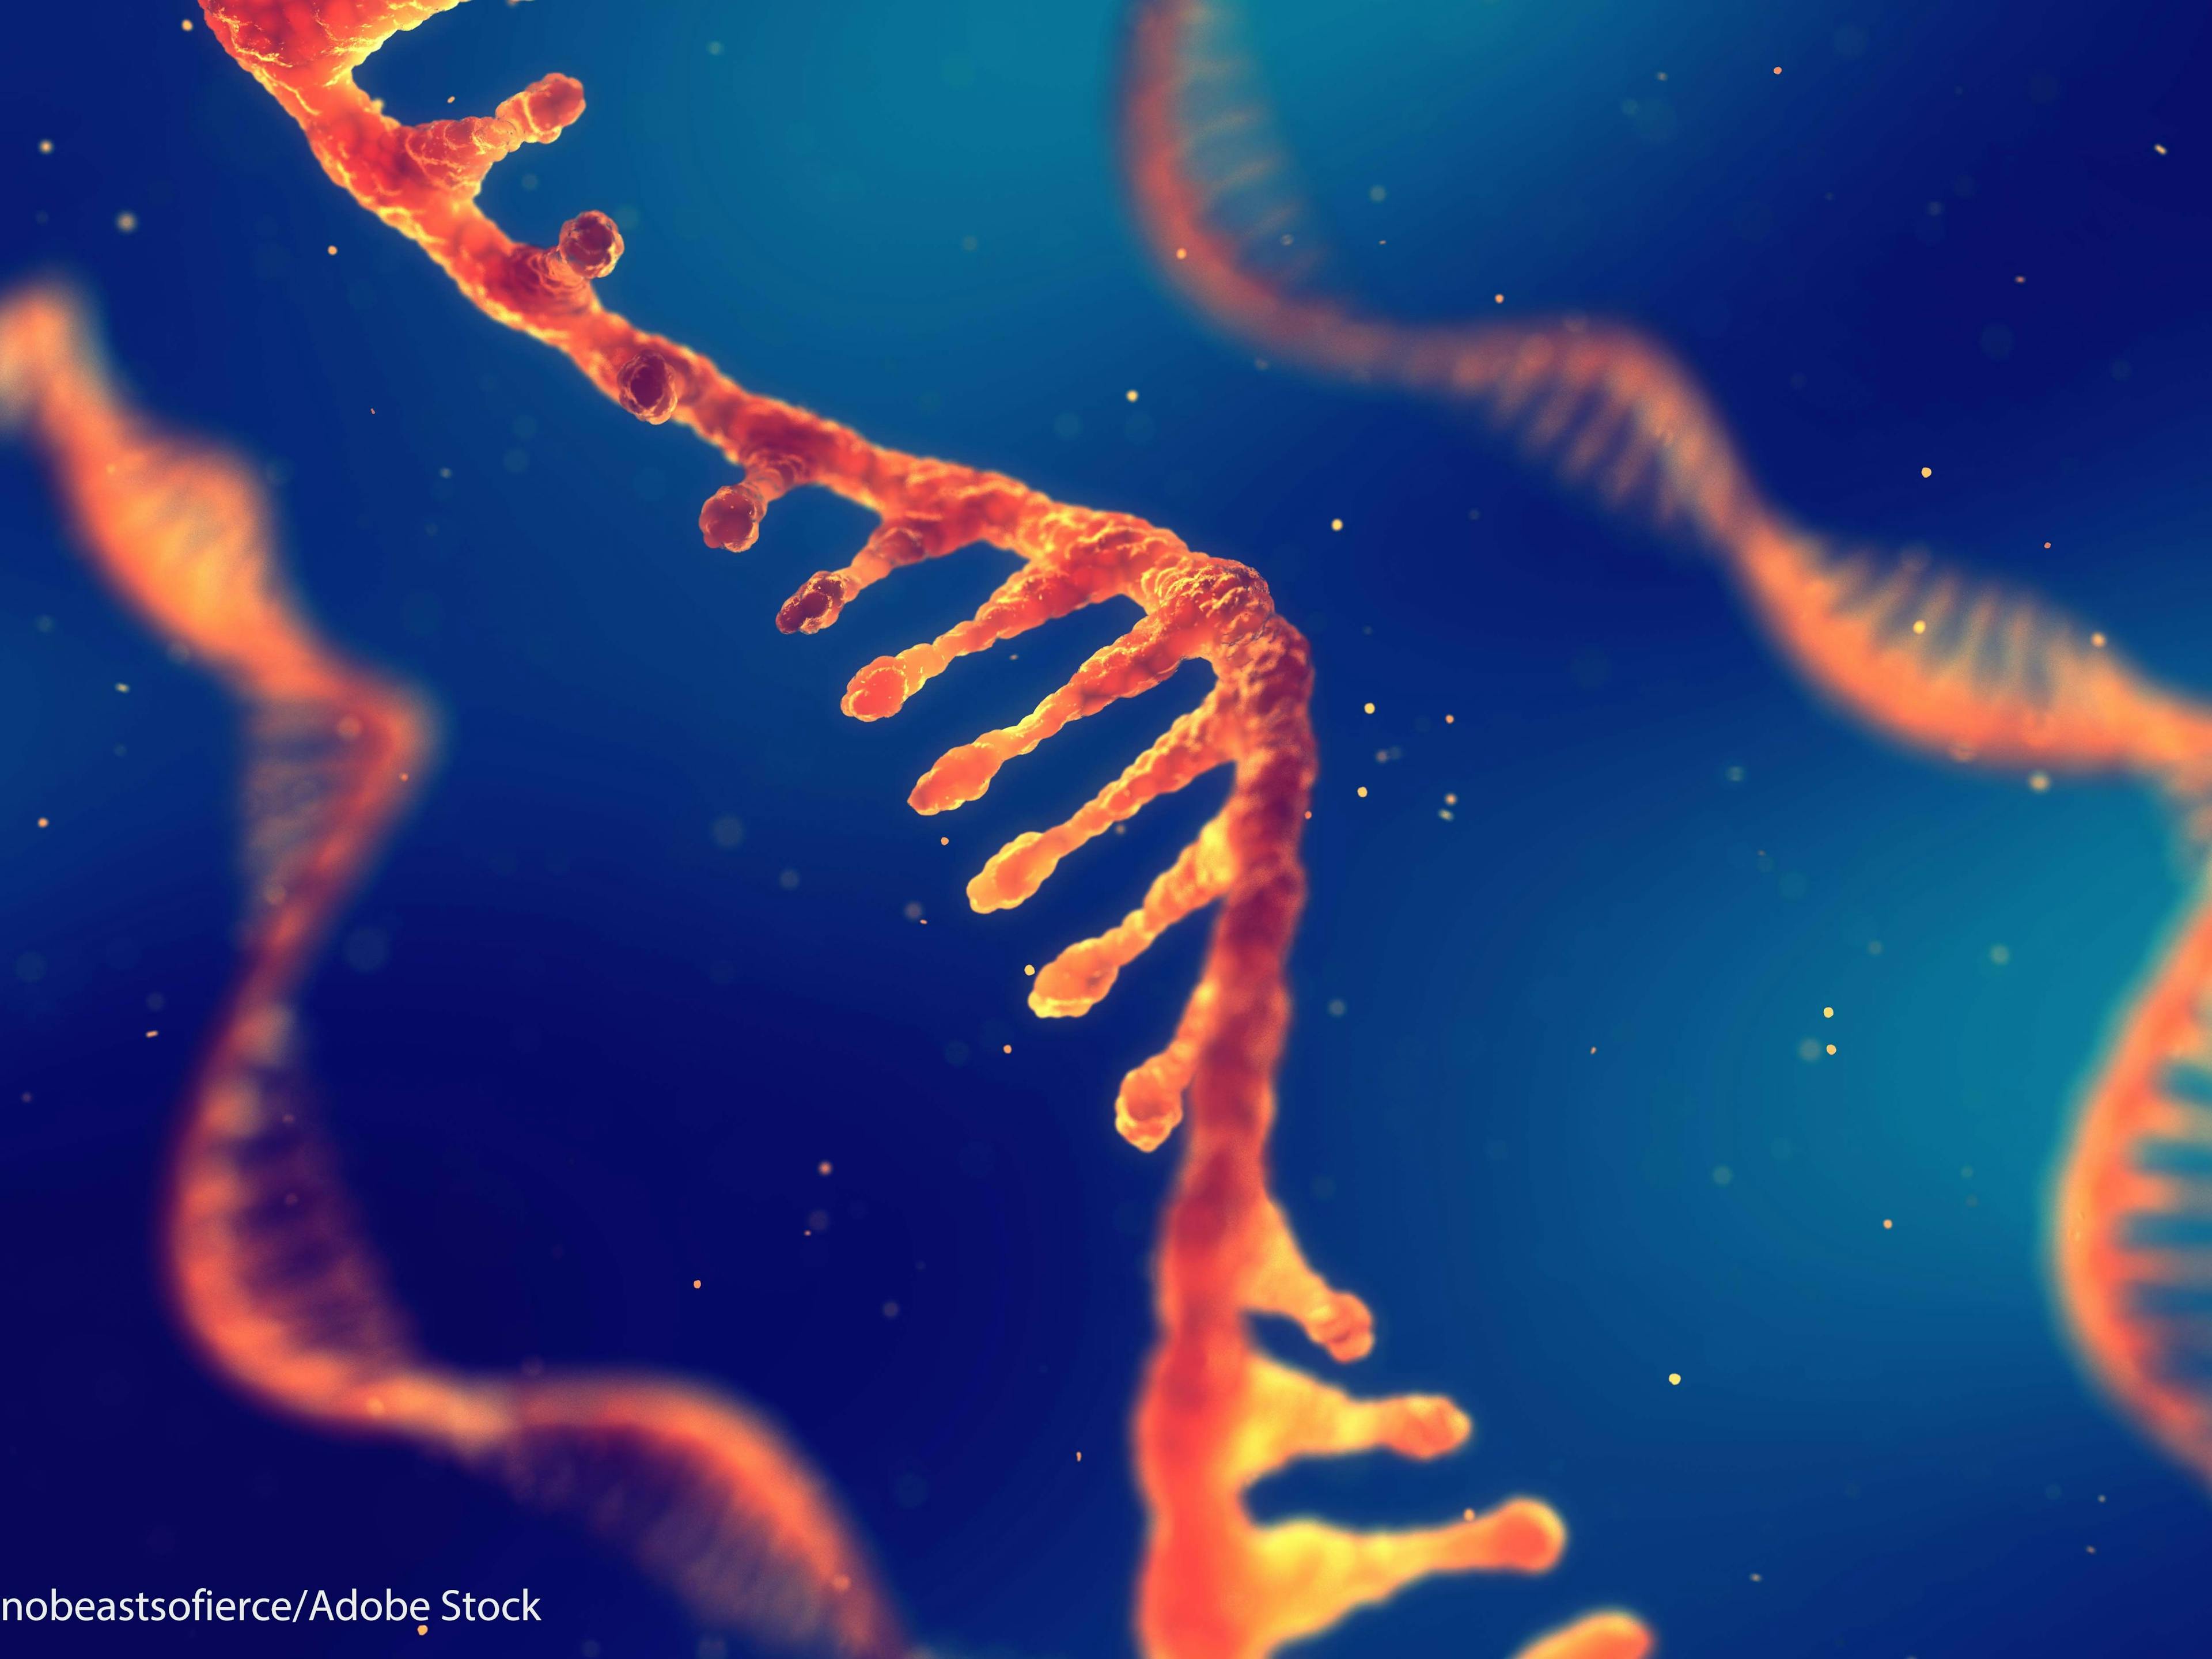 RNA Sequencing Shows Epigenetics Behind Pediatric Cancer